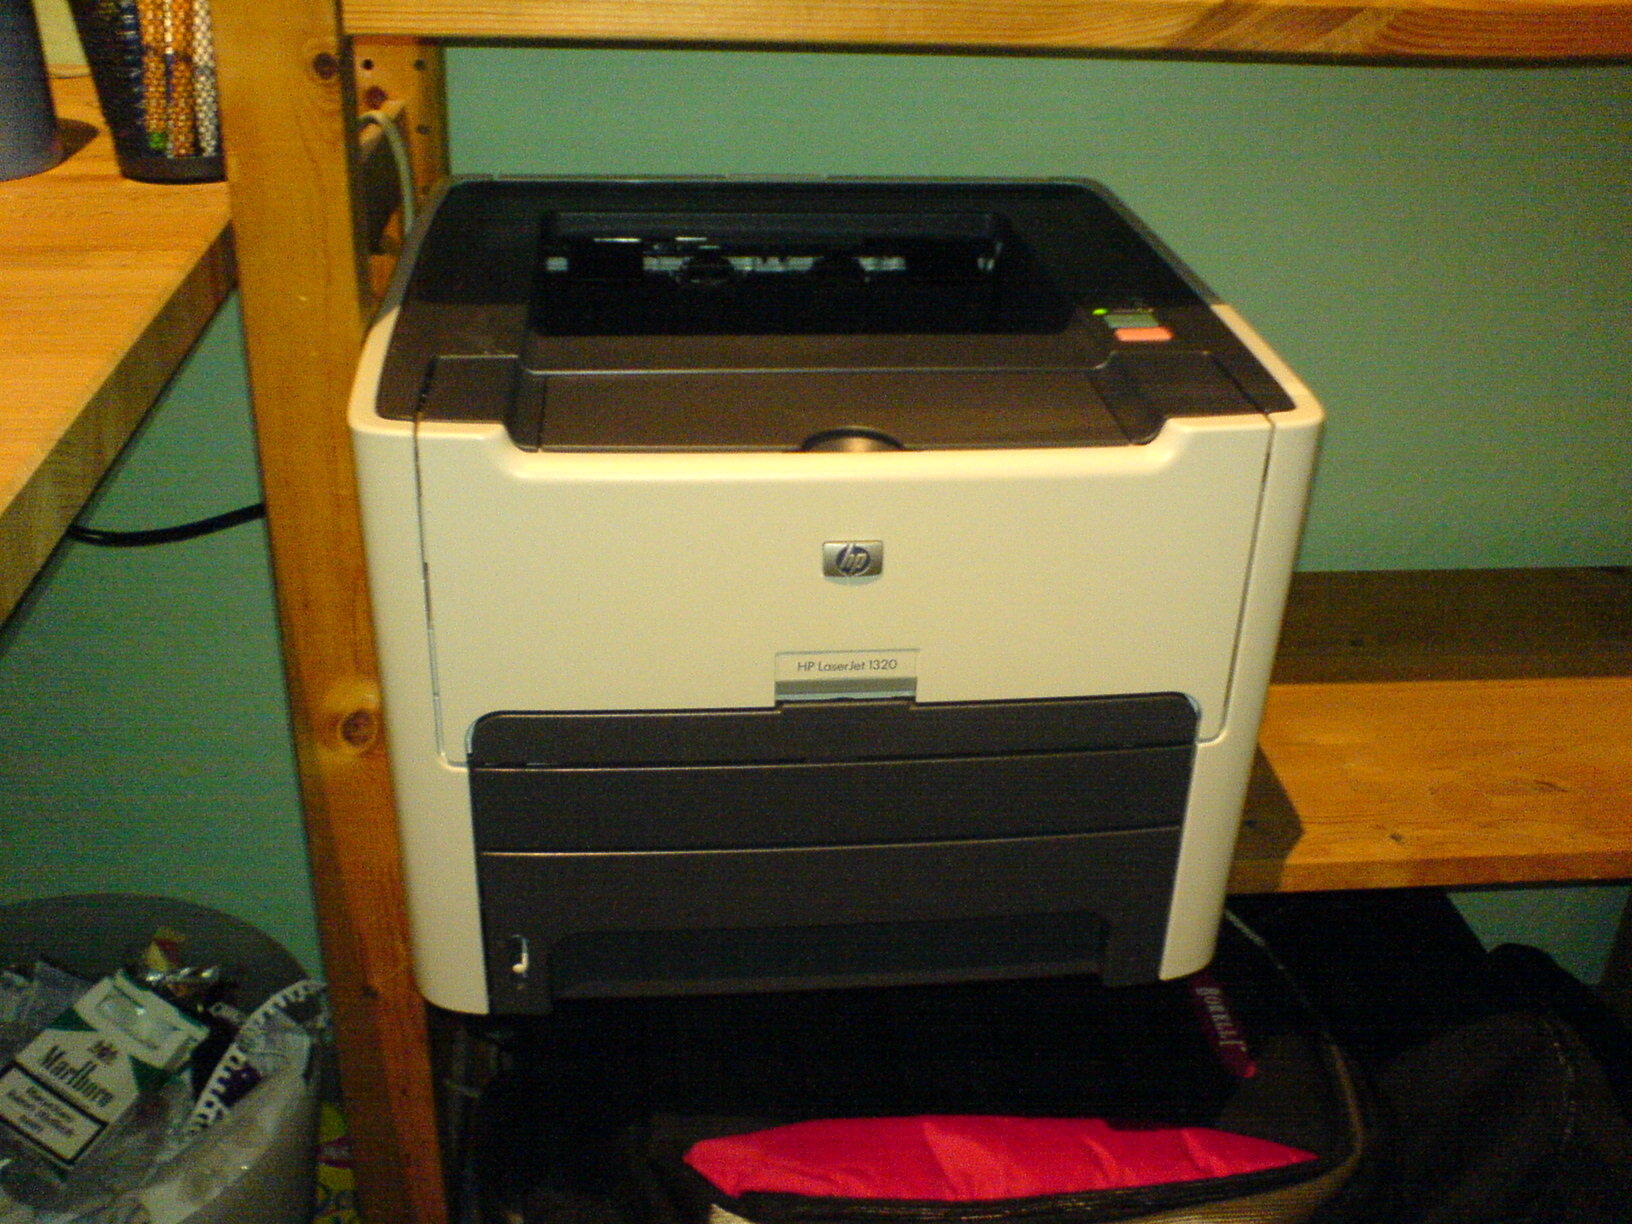 HP LaserJet printer on a wooden desk next to shelves